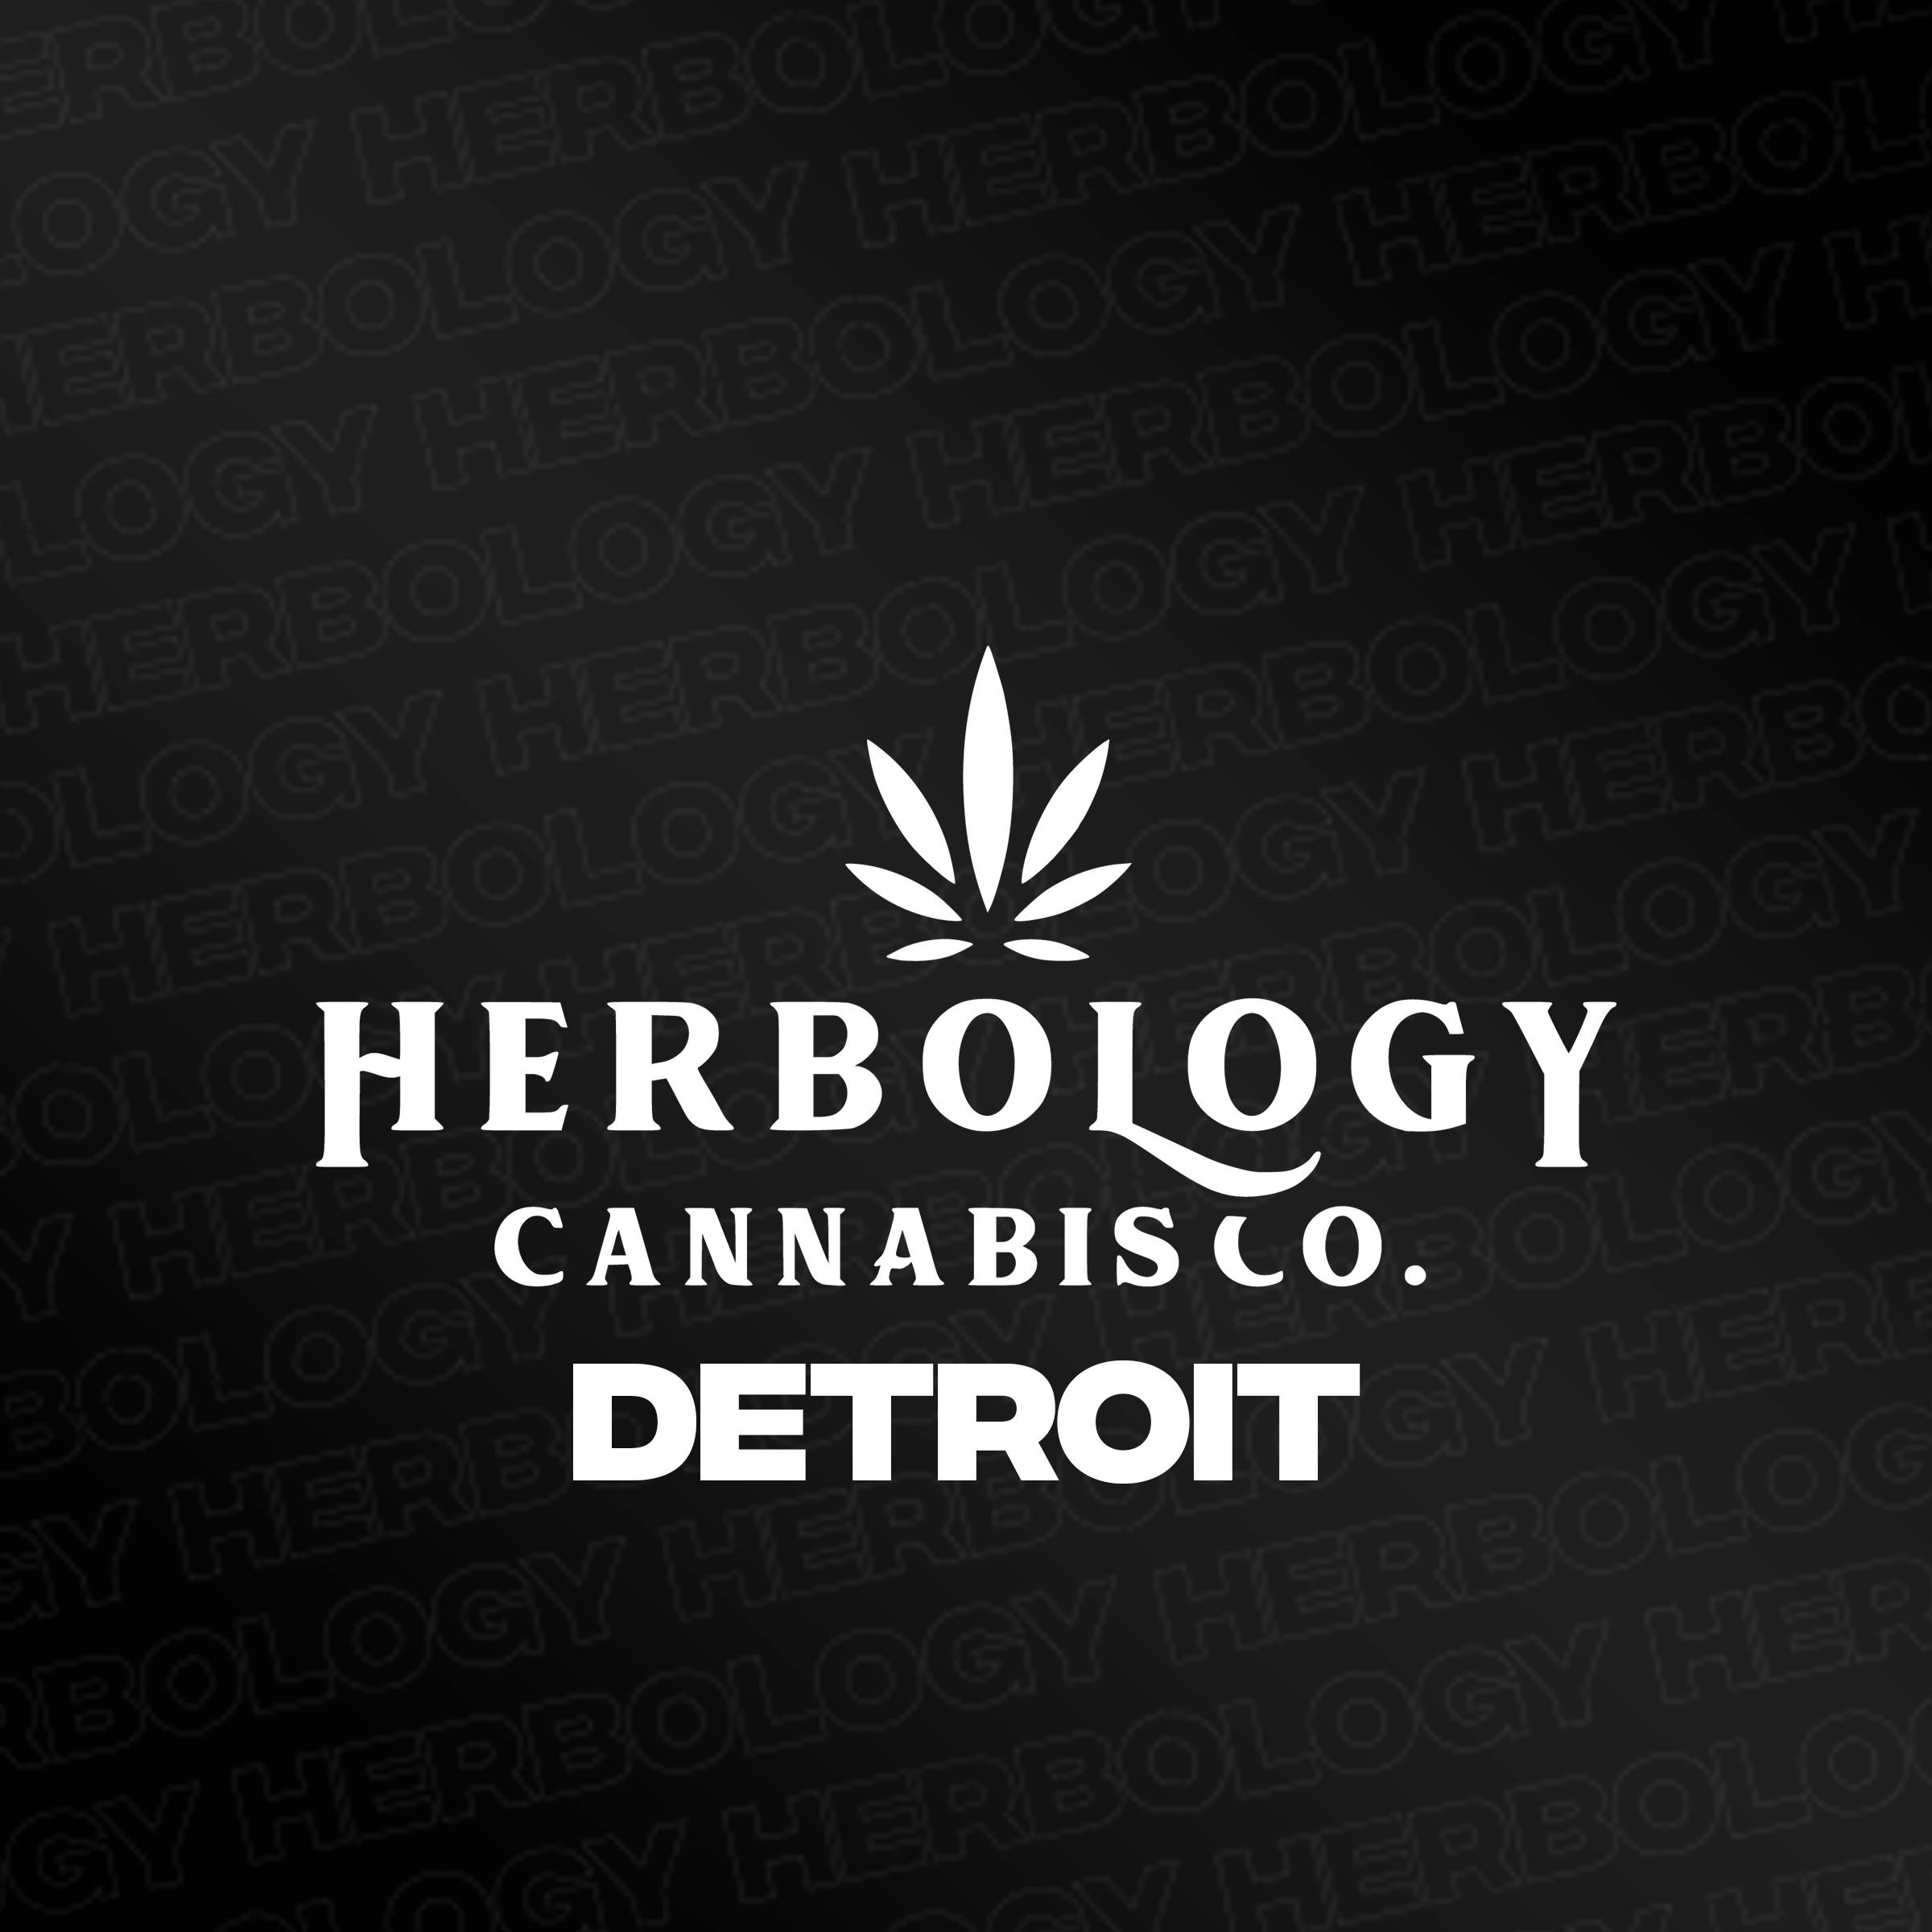 Herbology Cannabis Co. Detroit - Recreational Cannabis Dispensary logo